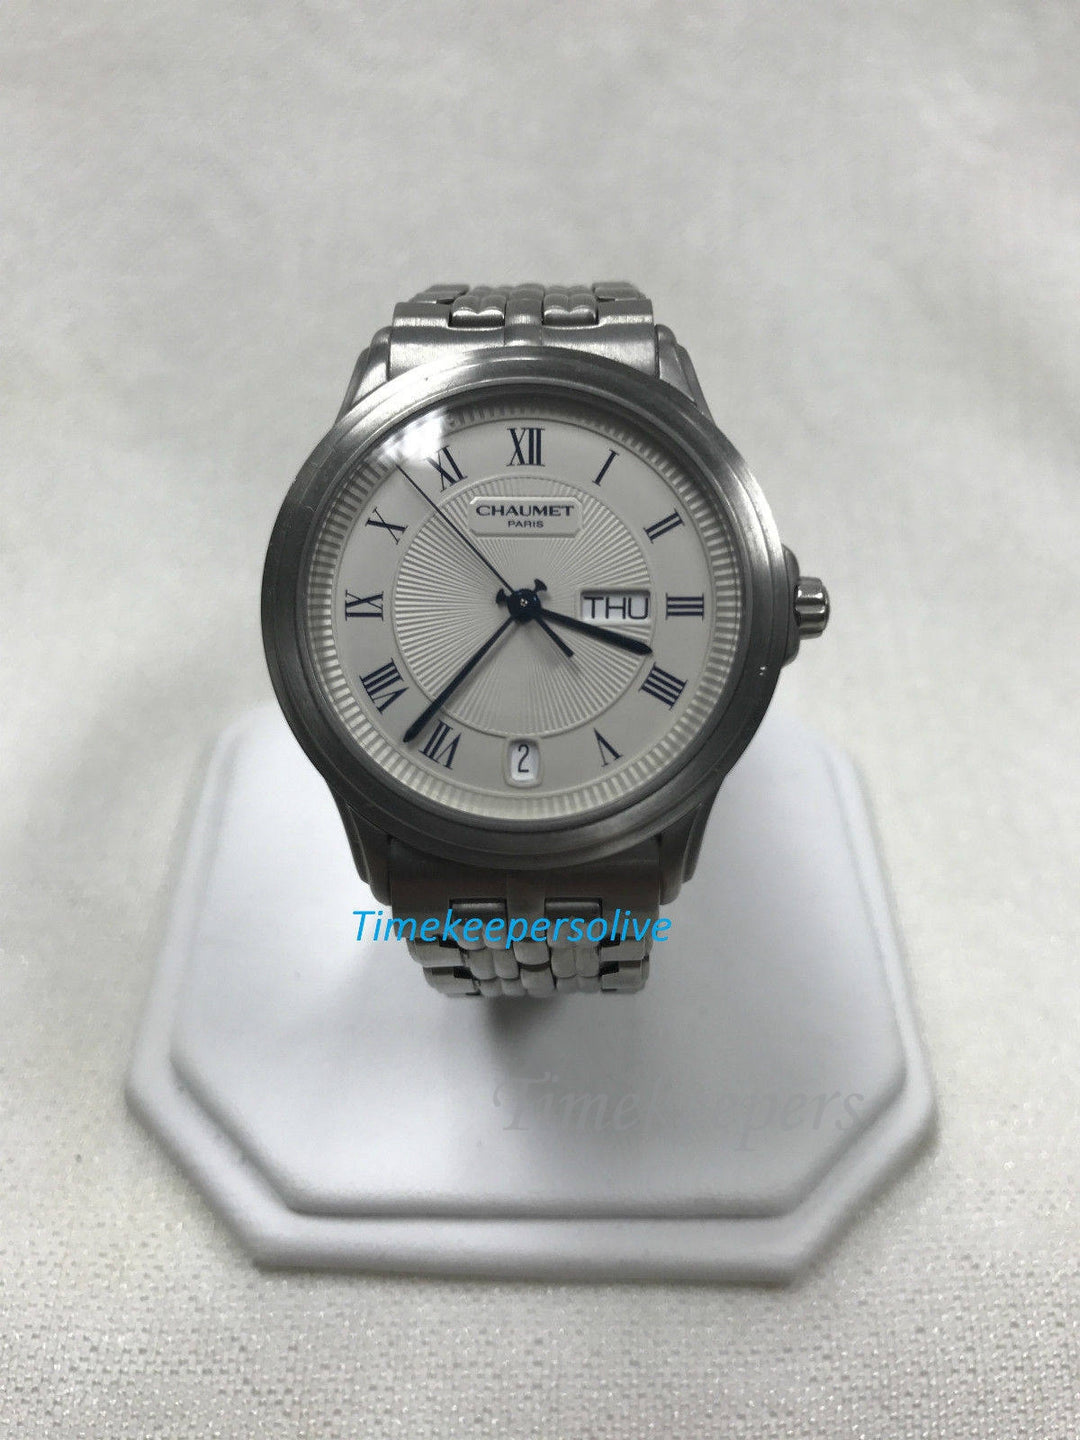 a455 Modern Collection Chaumet Paris Stainless Steel Quartz Wrist Watch 50m